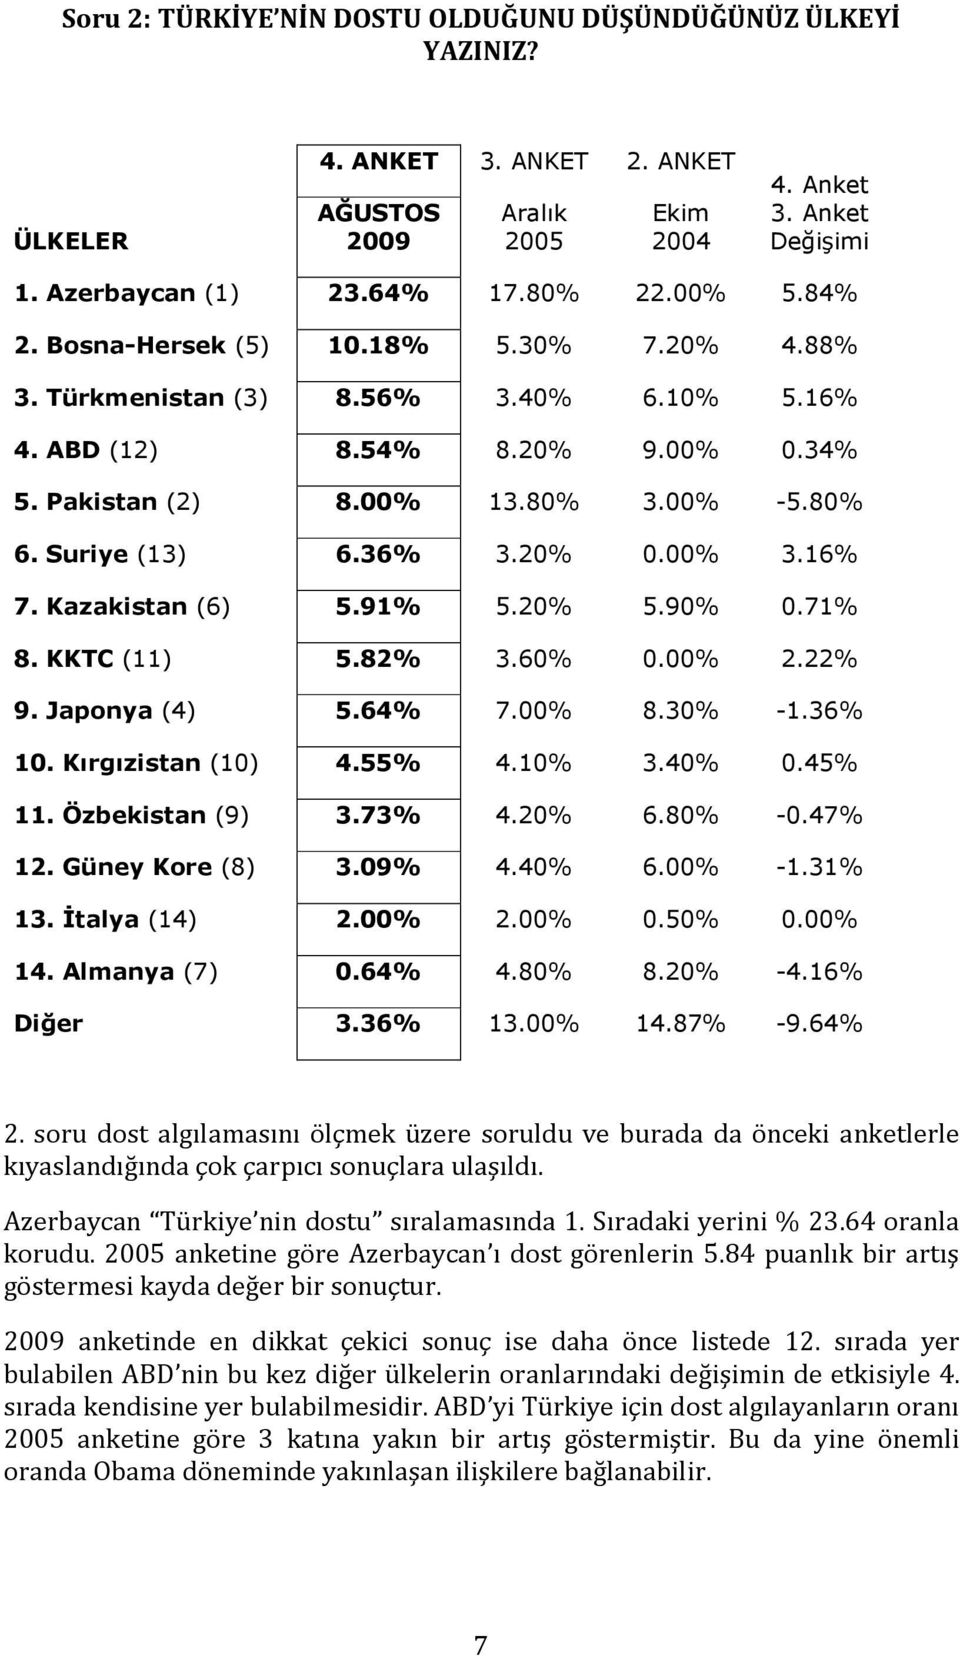 20% 3.16% 7. Kazakistan (6) 5.91% 5.20% 5.90% 0.71% 8. KKTC (11) 5.82% 3.60% 2.22% 9. Japonya (4) 5.64% 7.00% 8.30% -1.36% 10. Kırgızistan (10) 4.55% 4.10% 3.40% 0.45% 11. Özbekistan (9) 3.73% 4.